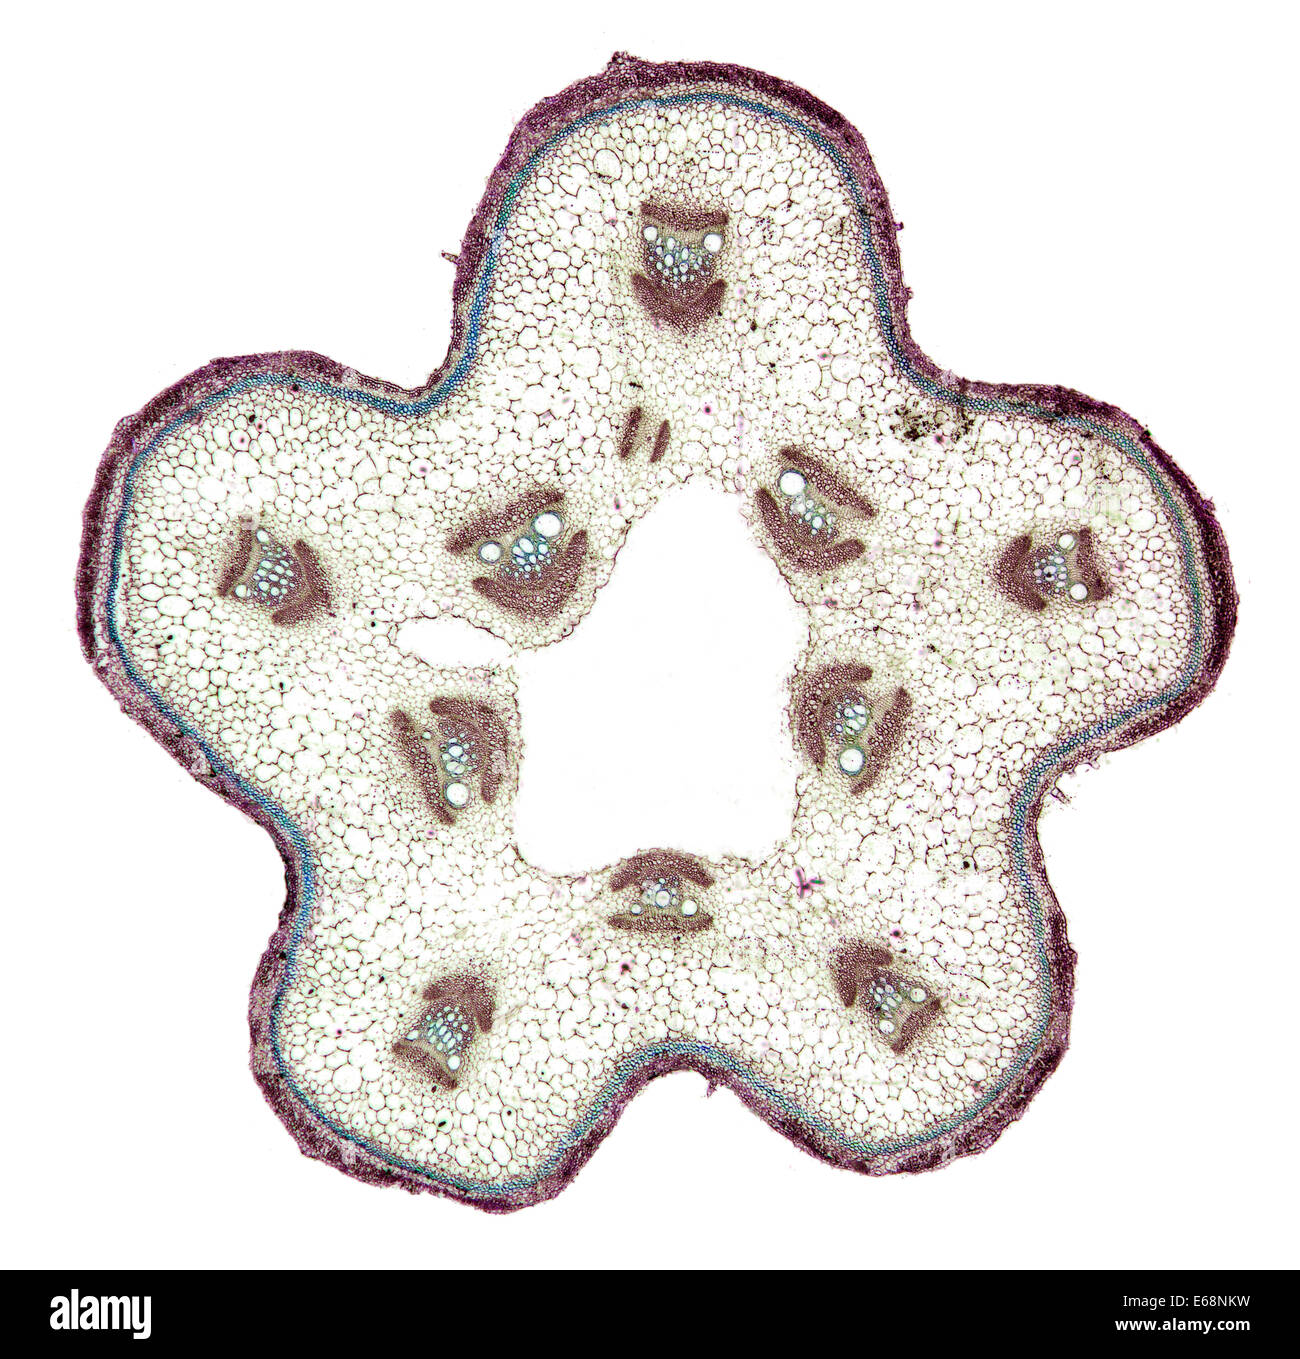 Cucurbita sp. stem TS showing sieve tubes, brightfield photomicrograph Stock Photo